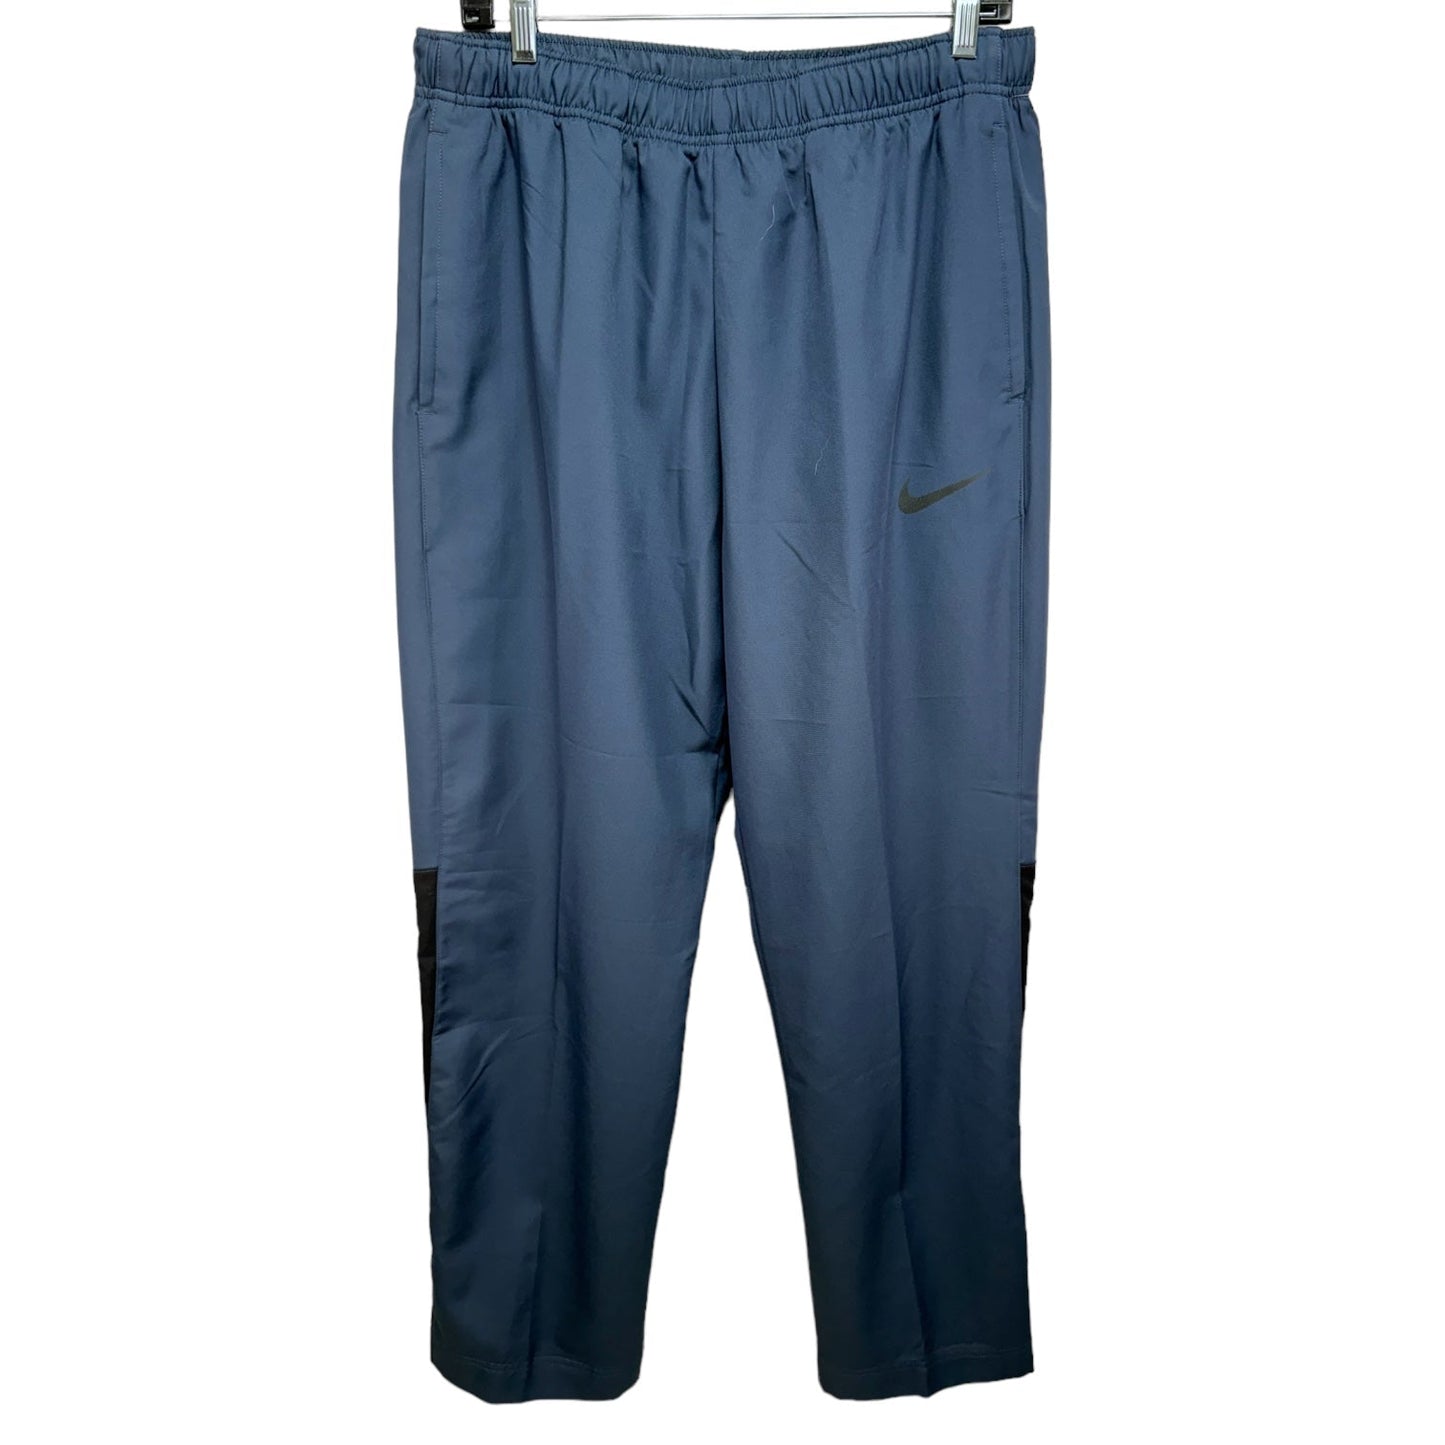 Blue Athletic Pants Nike Apparel, Size Xl